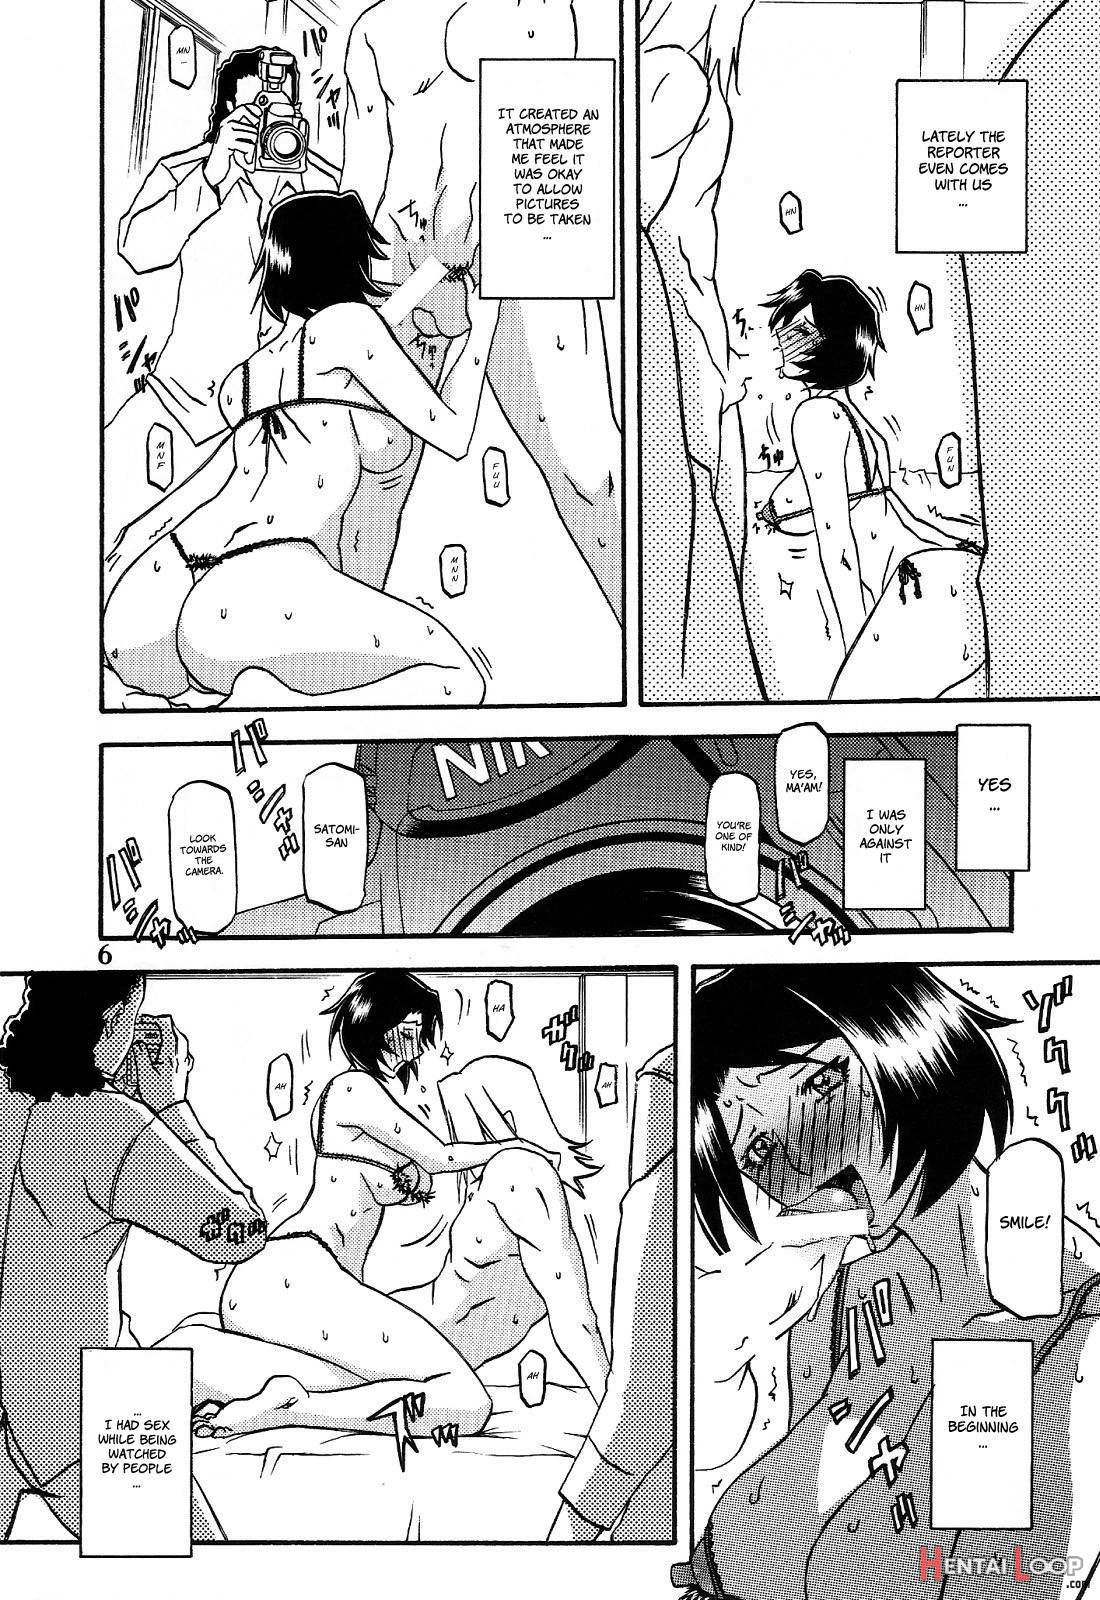 Yamahime no Mi -Satomi AFTER- page 5